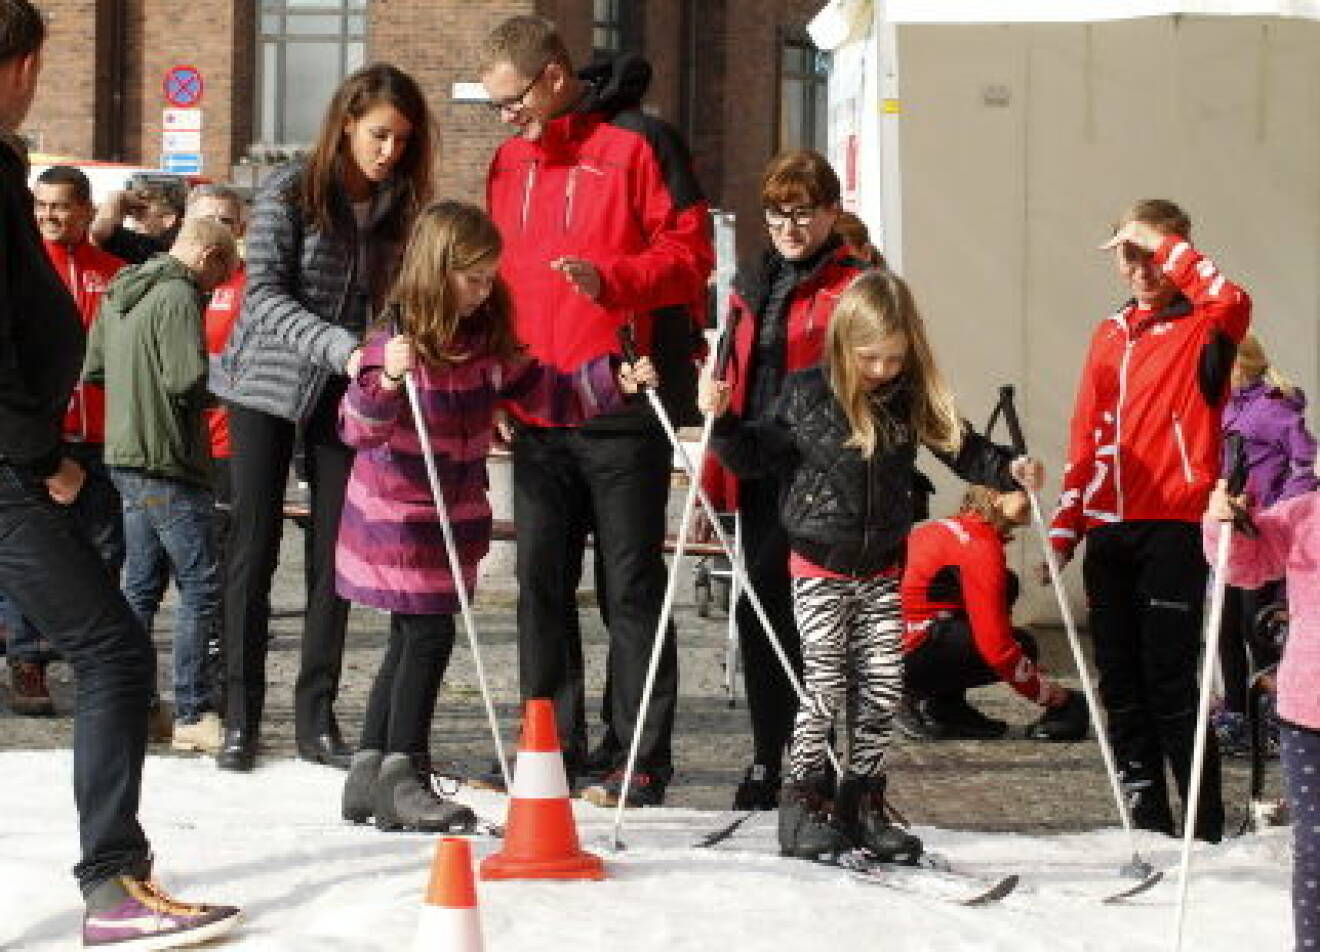 HRH Princess Marie opens the ski season in Danish city Aarhus